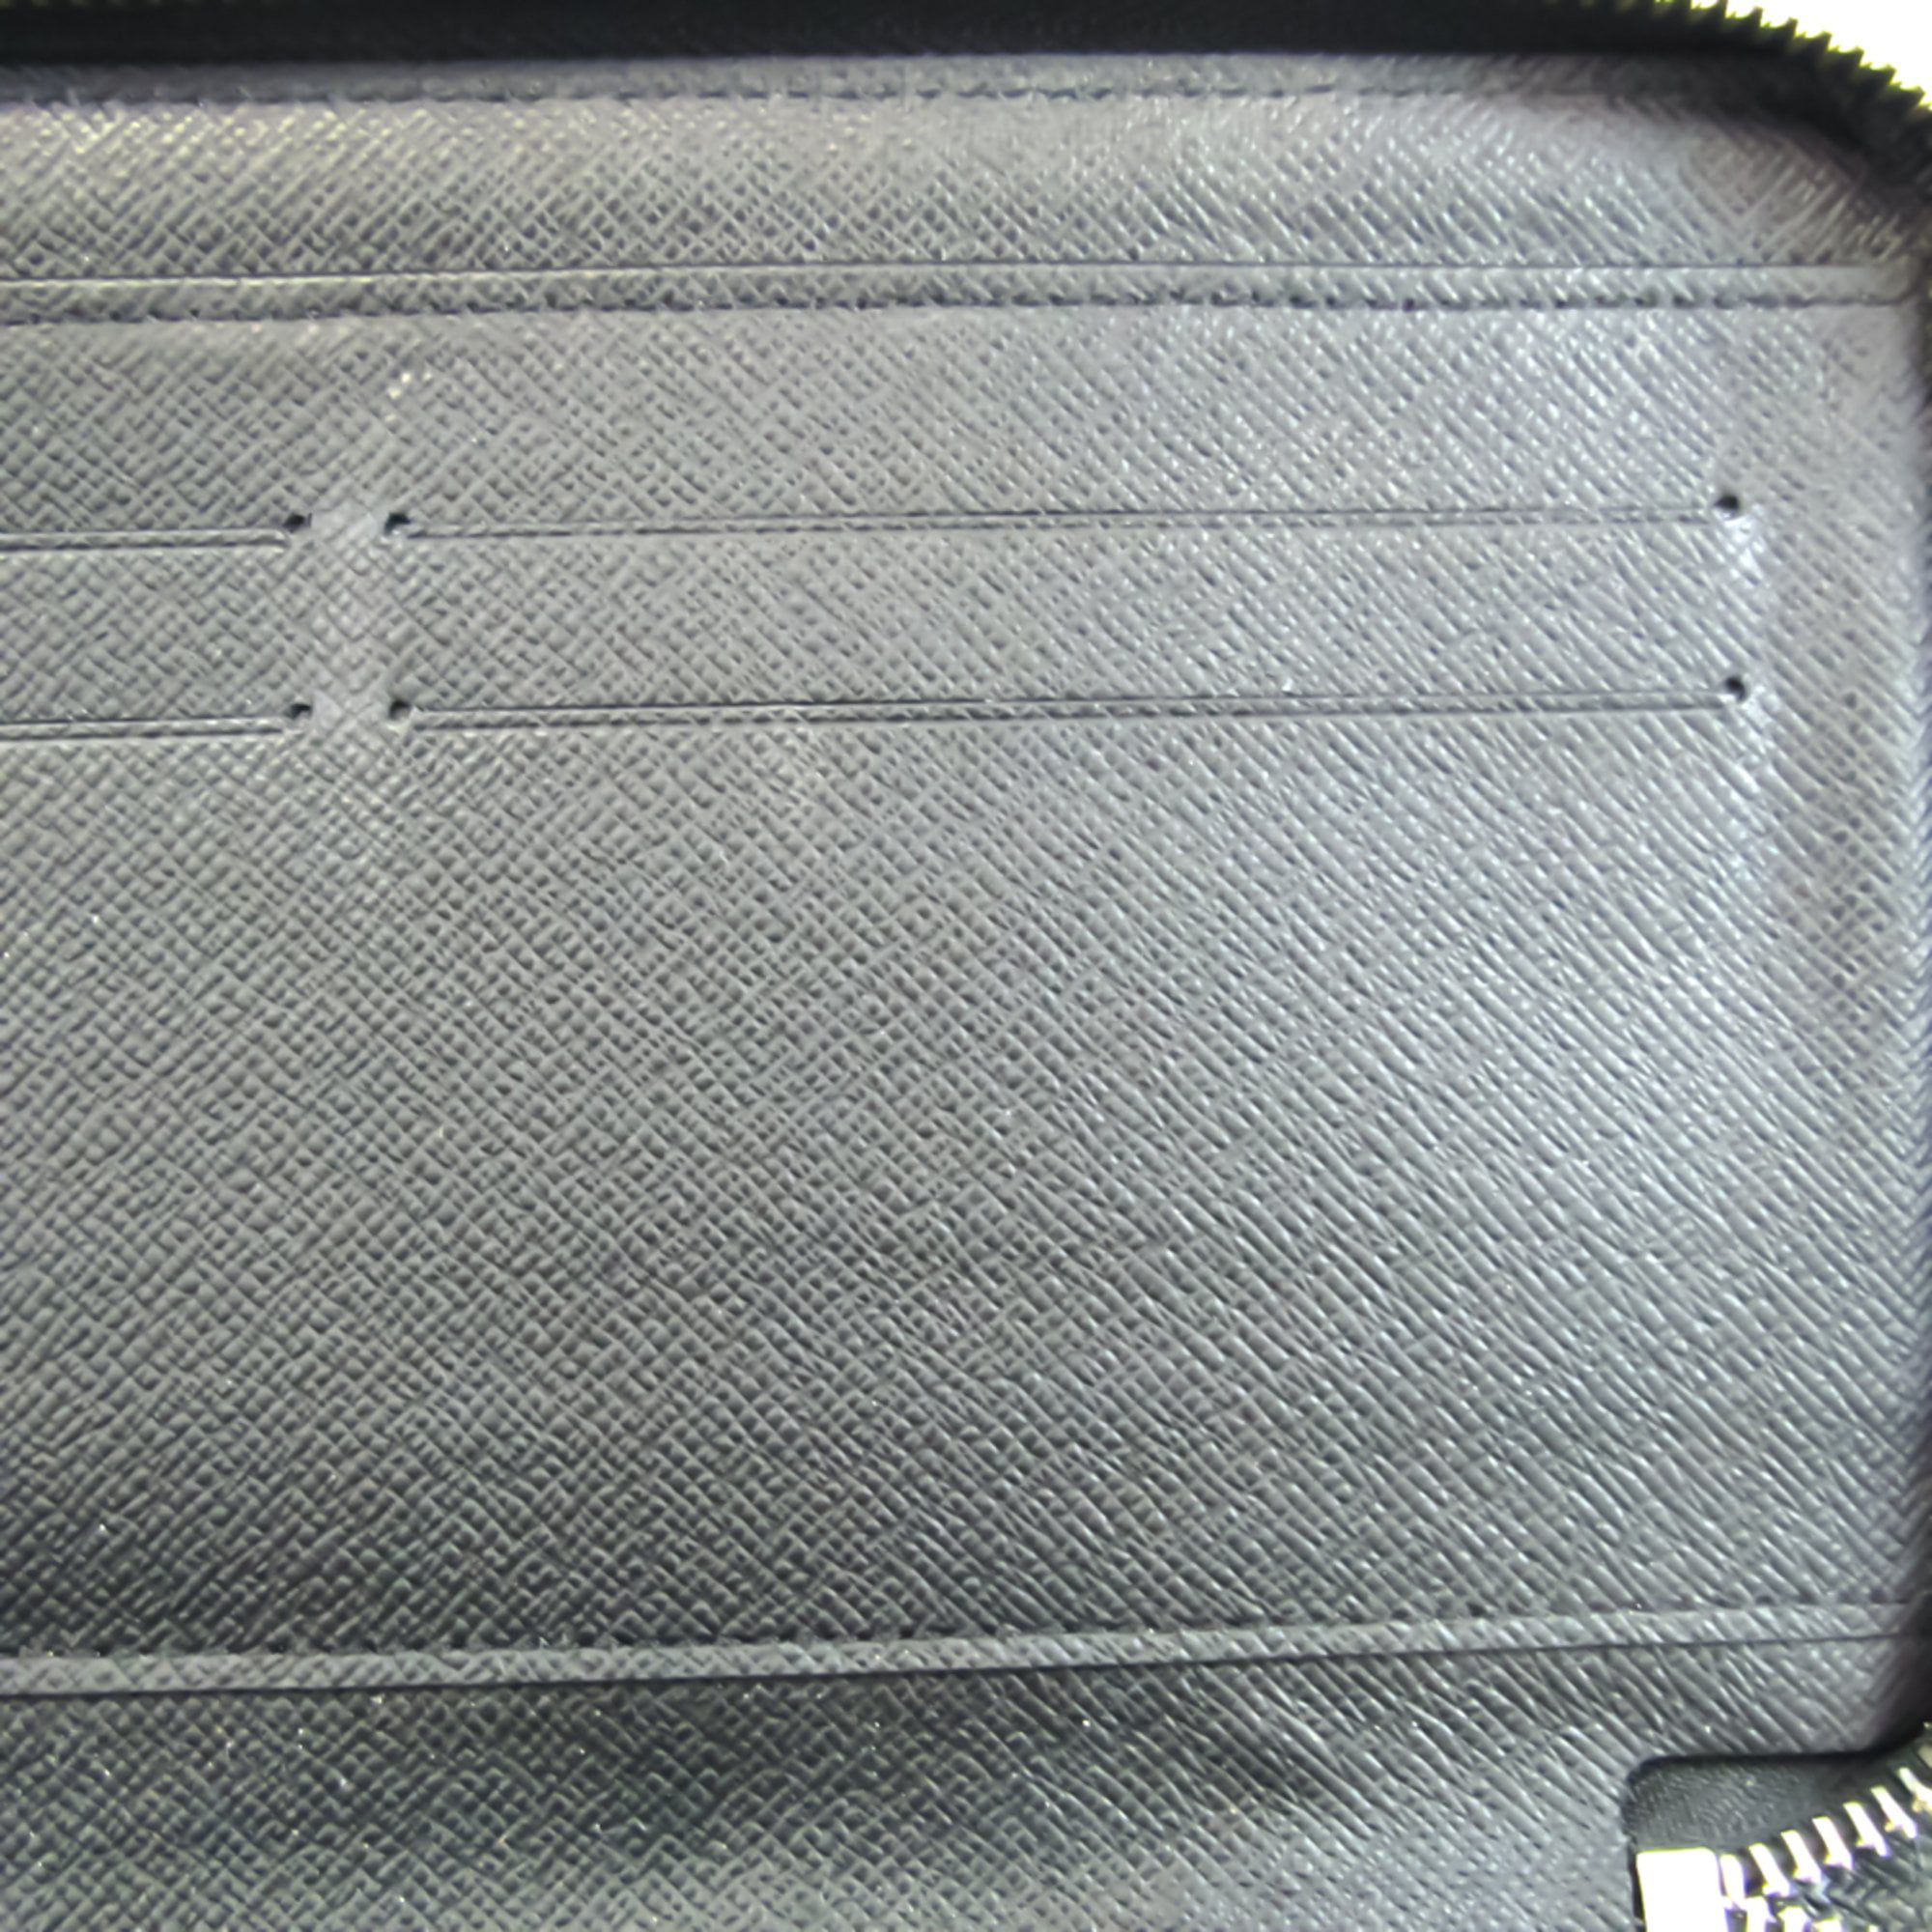 Louis Vuitton Pepper Taiga Leather Bifold Wallet